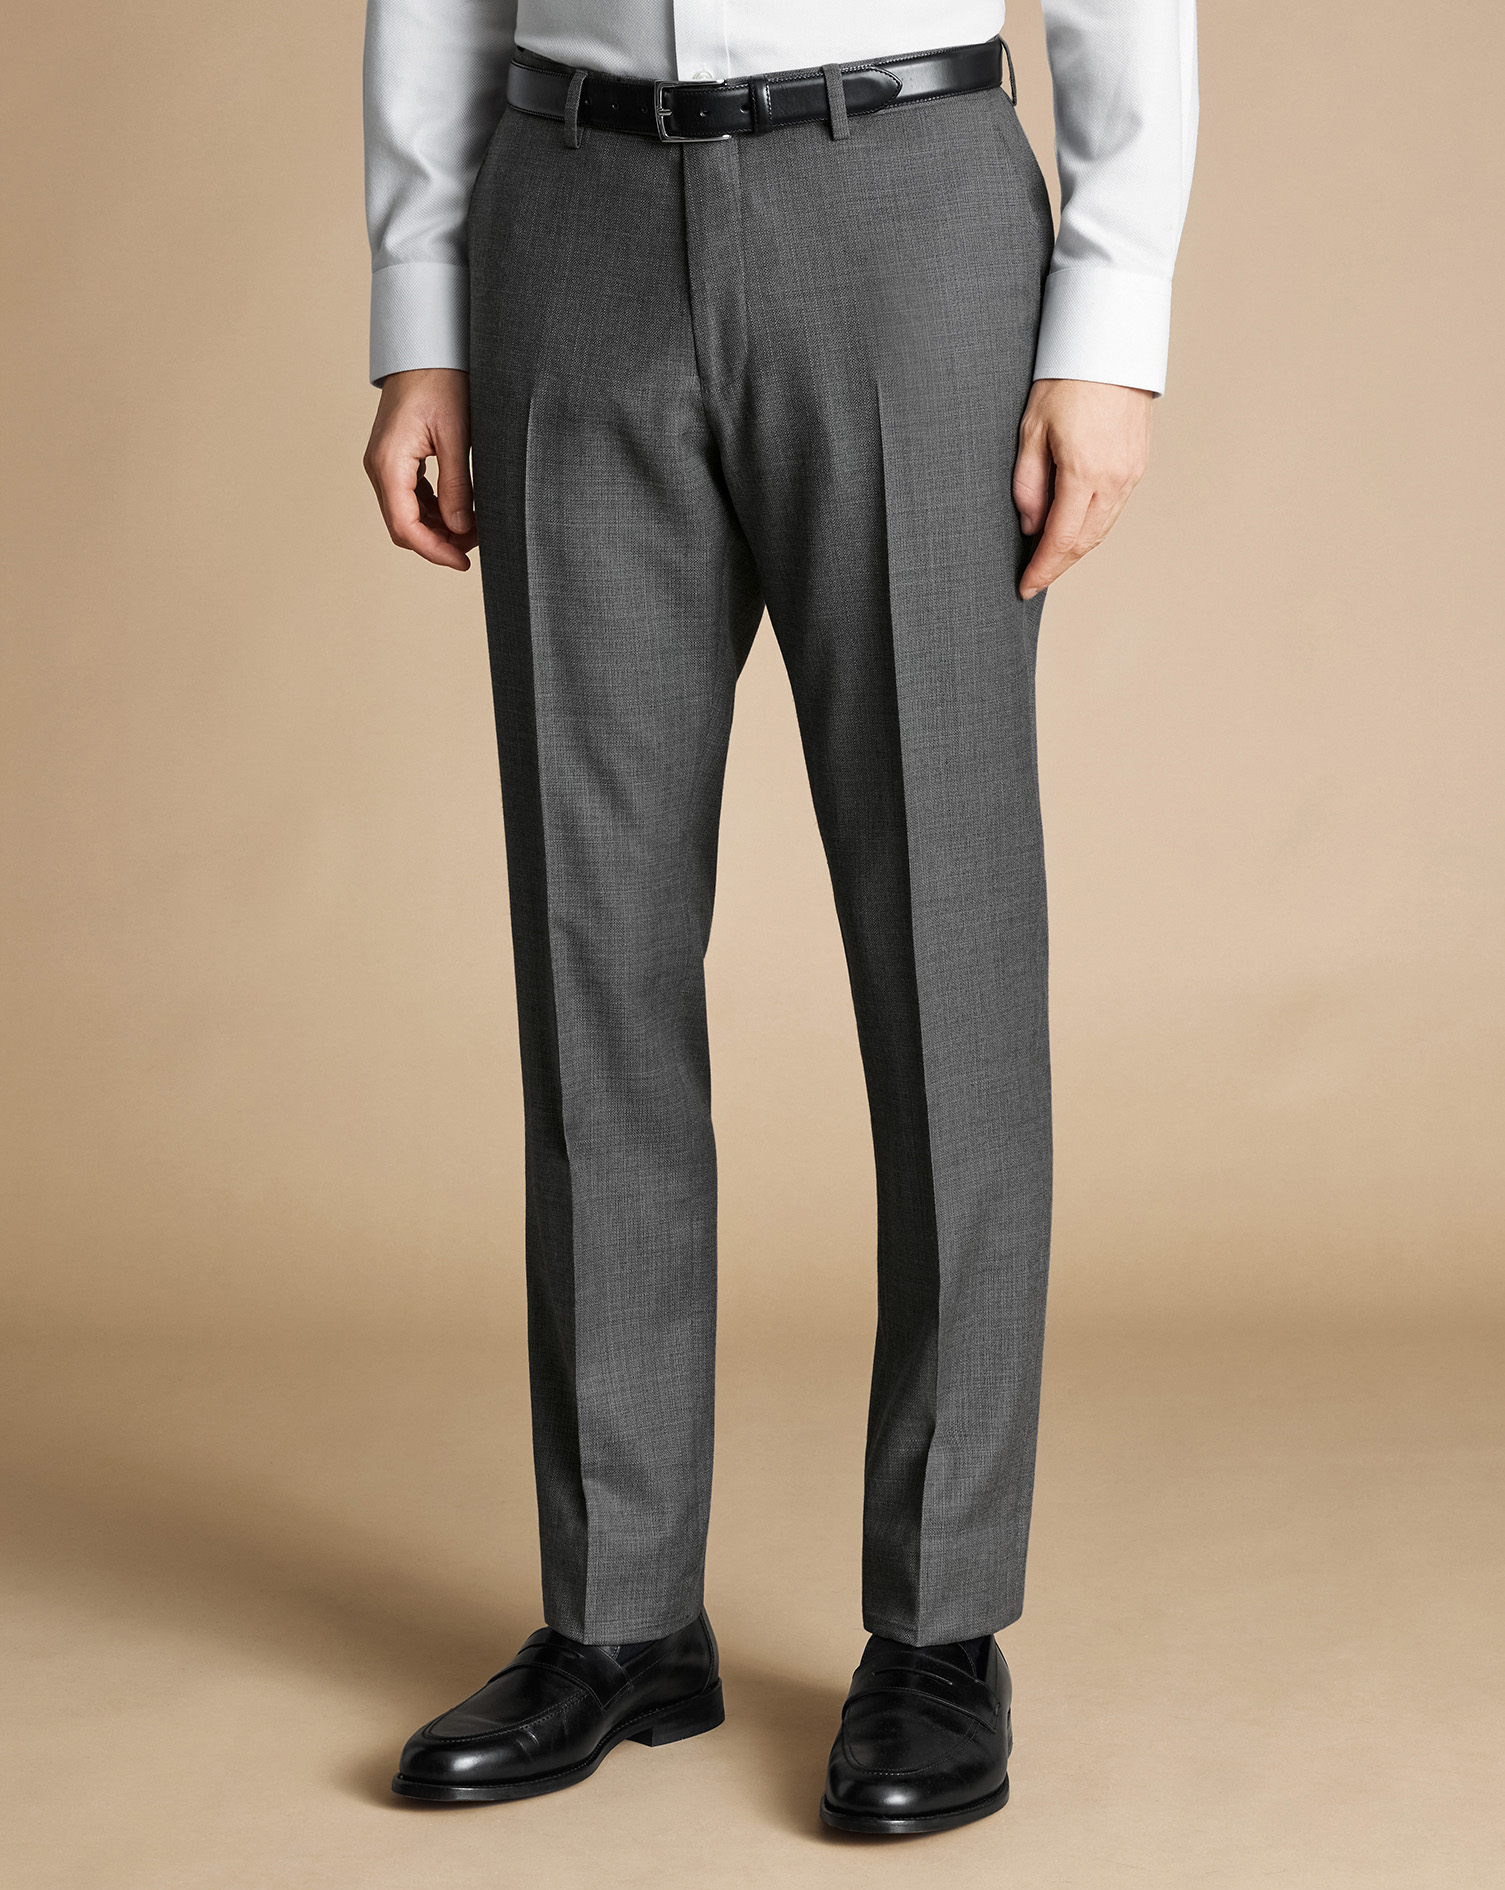 Men's Charles Tyrwhitt Italian Luxury Suit Trousers - Grey Size 36/38
